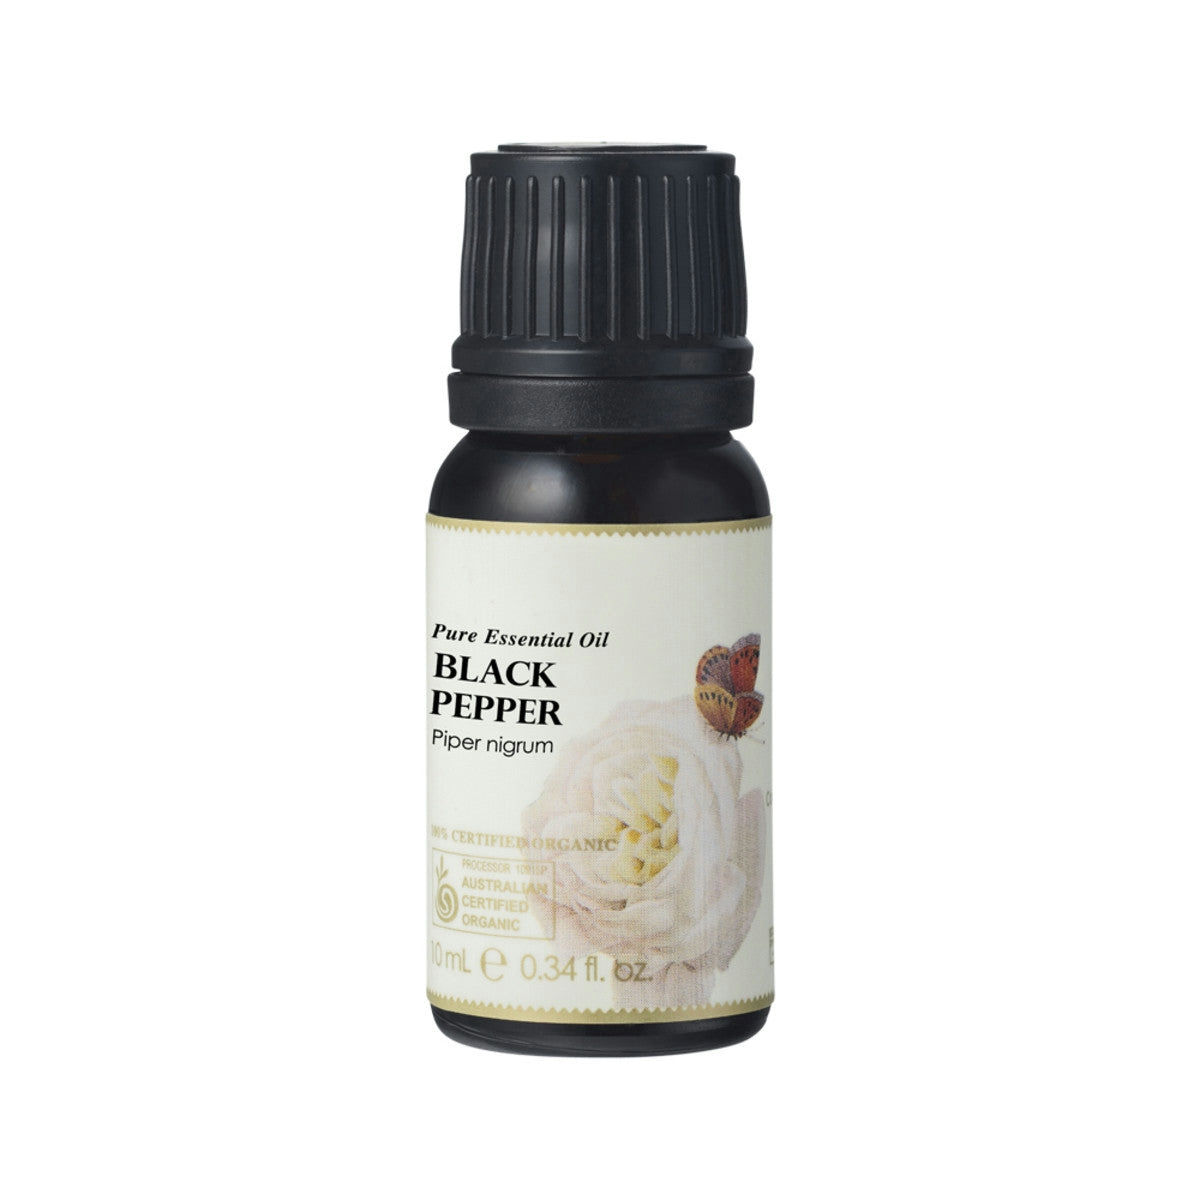 image of Ausganica 100% Certified Organic Essential Oil Black Pepper 10ml on white background